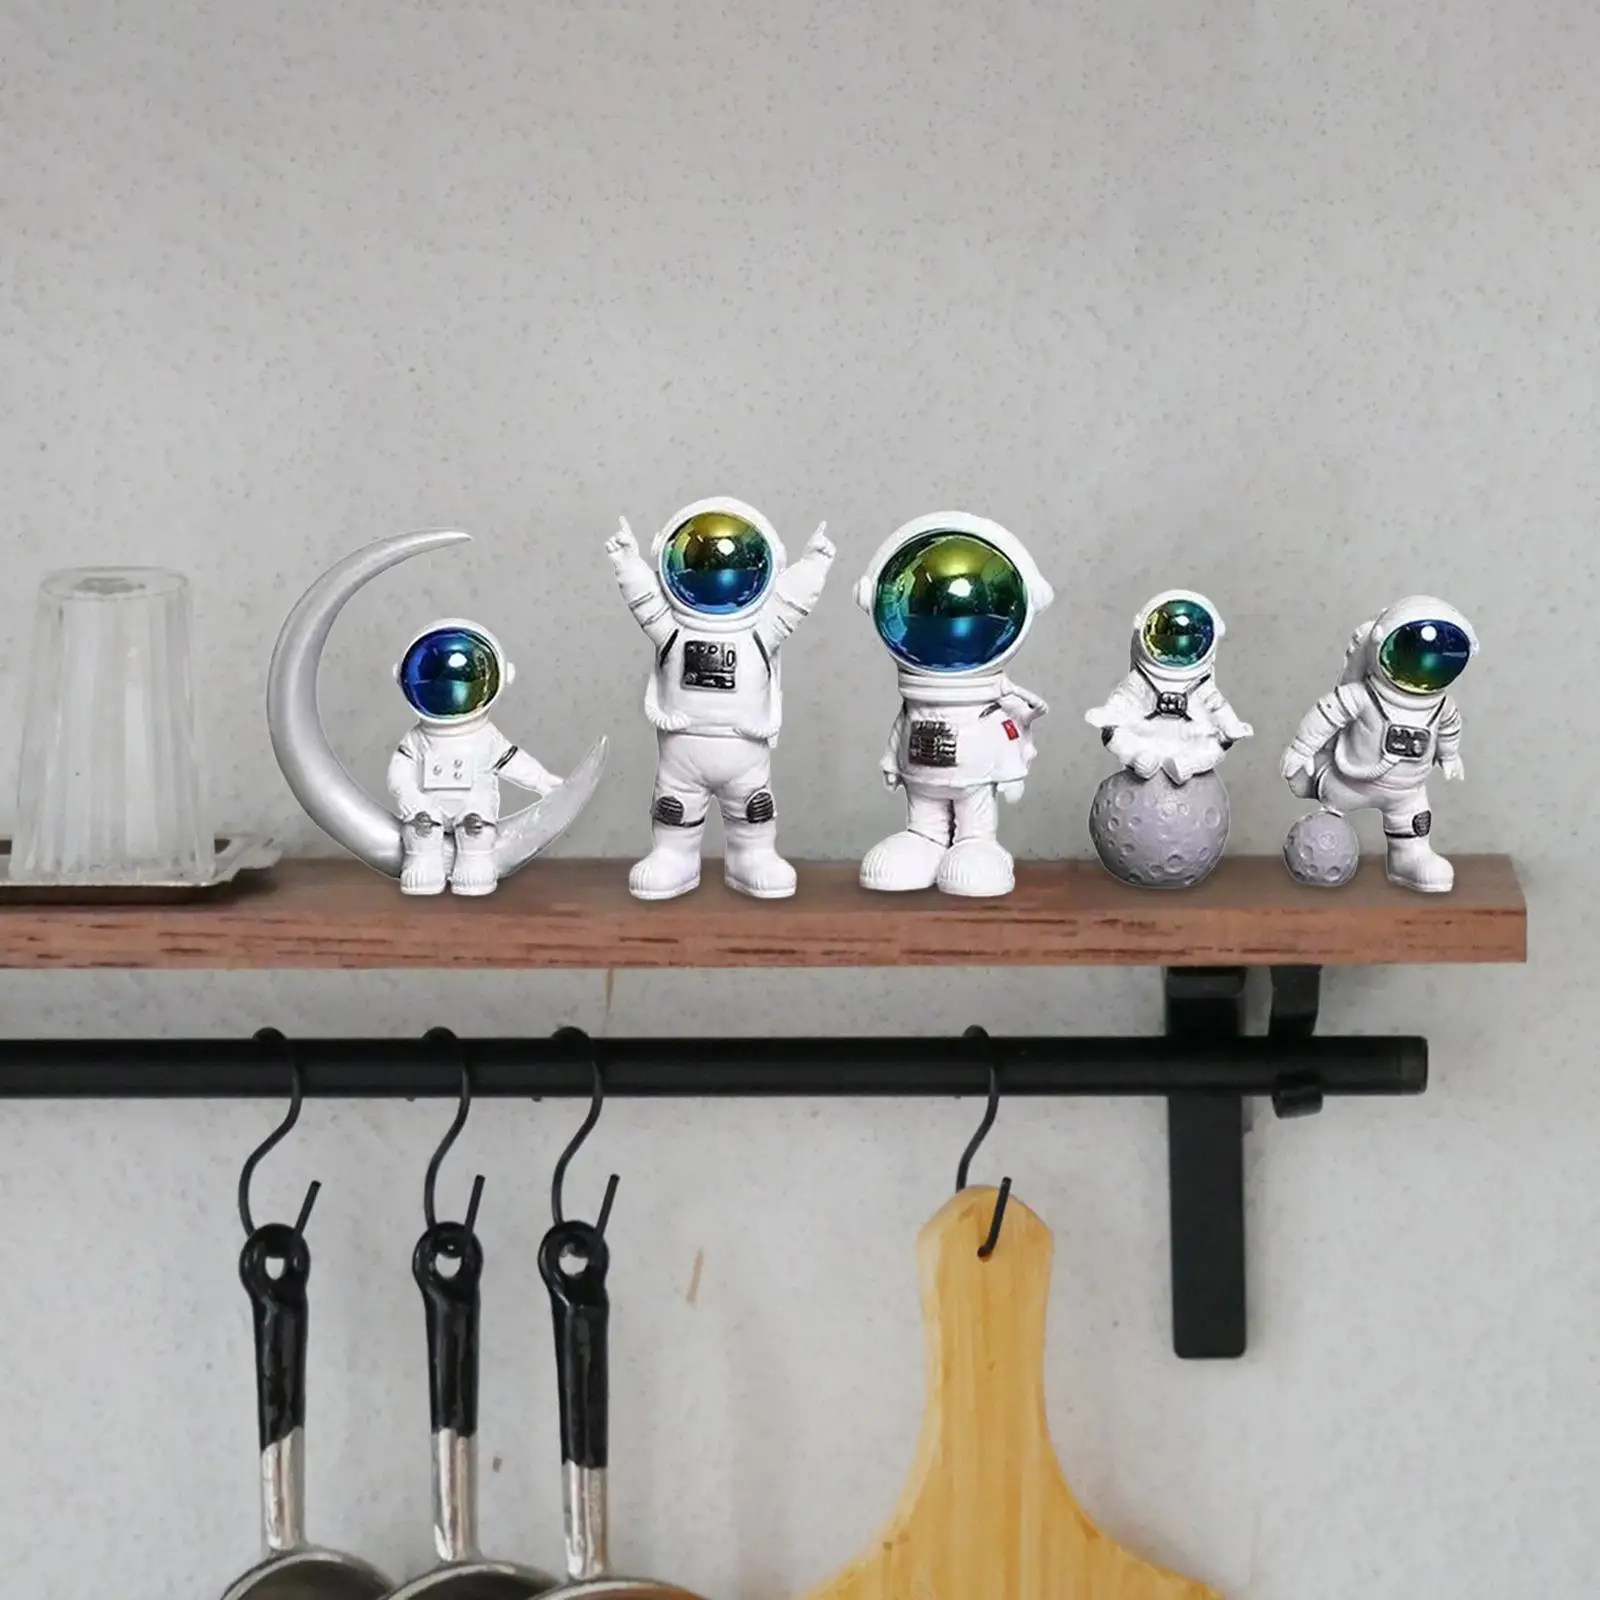 Astronaut Figure Educational Toys Figurine for Bedroom Decoration Kids Gift